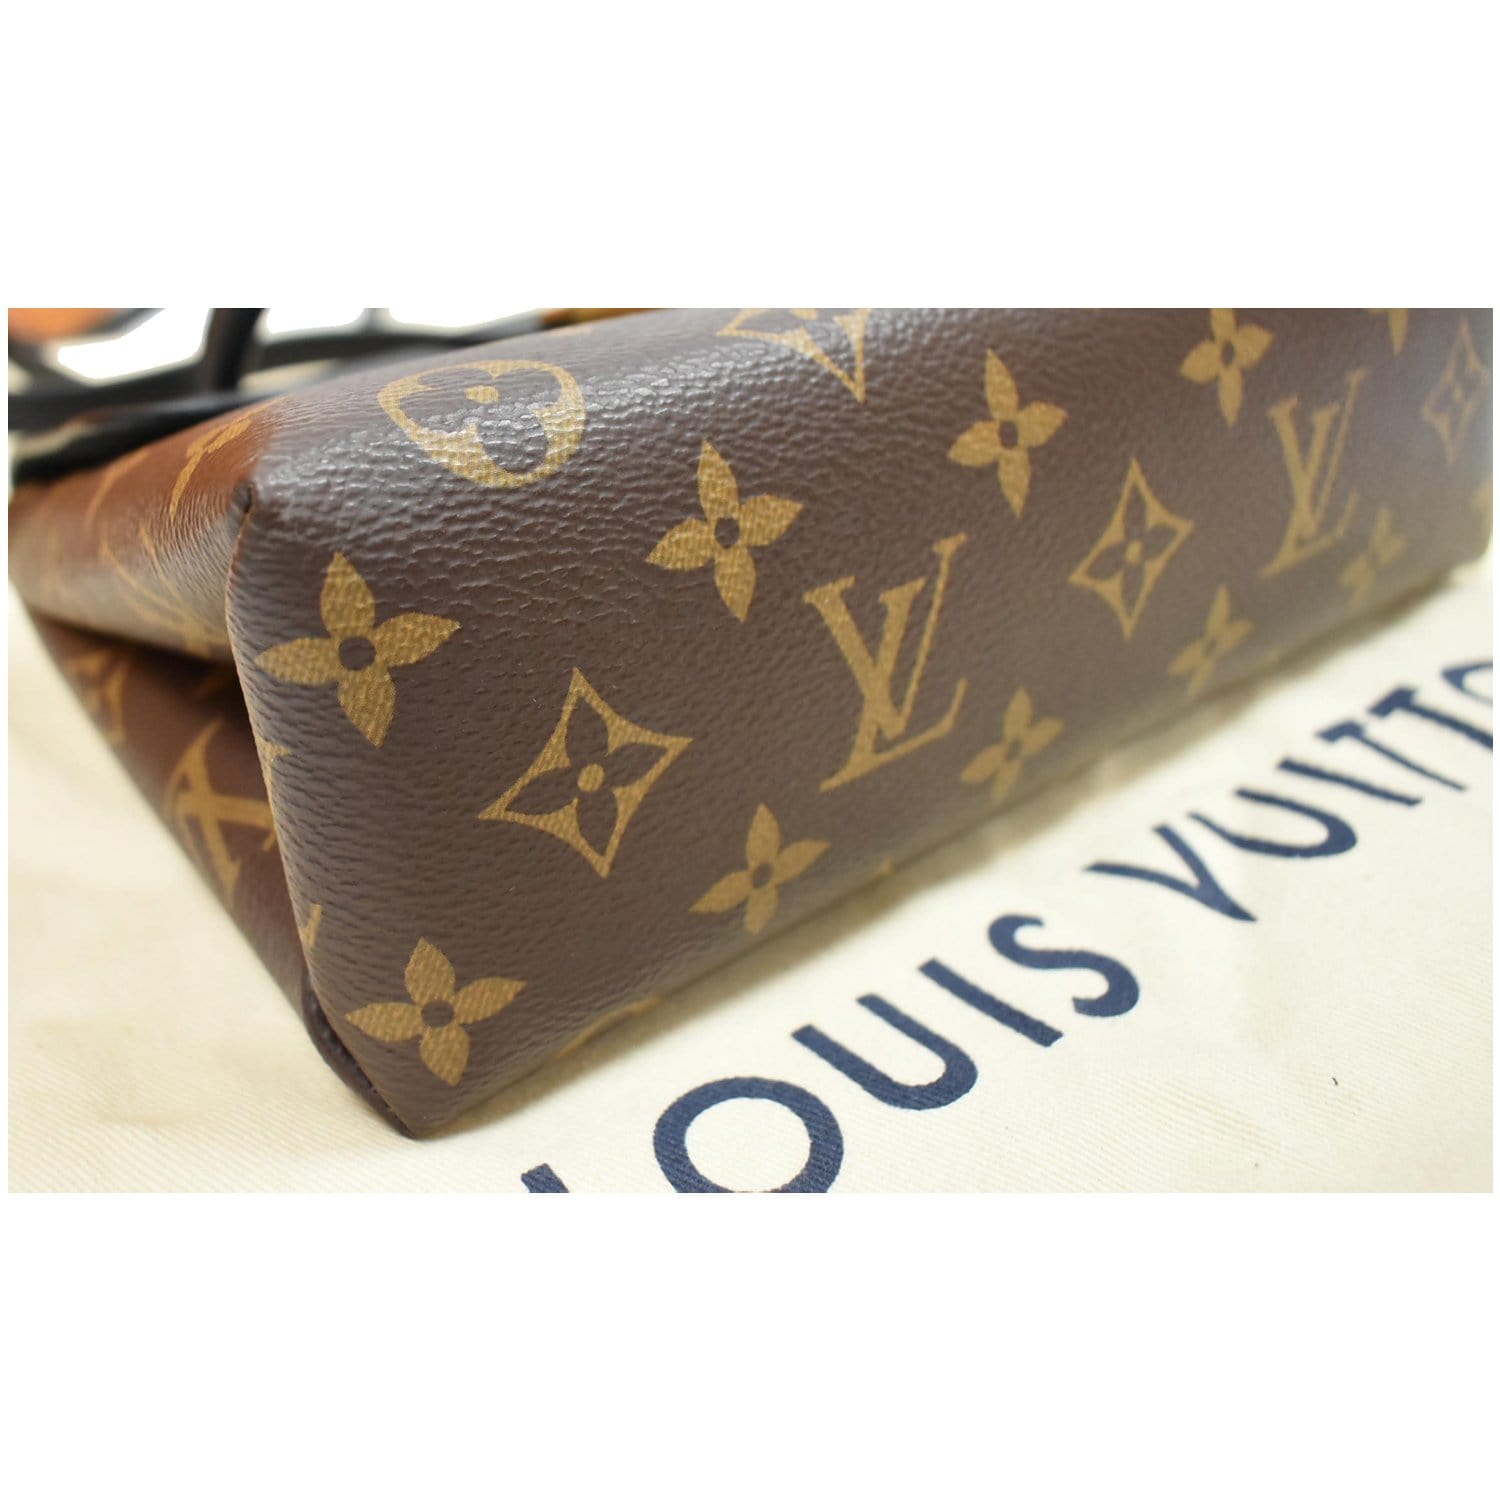 Louis Vuitton LOCKY Bb Monogram-Caramel